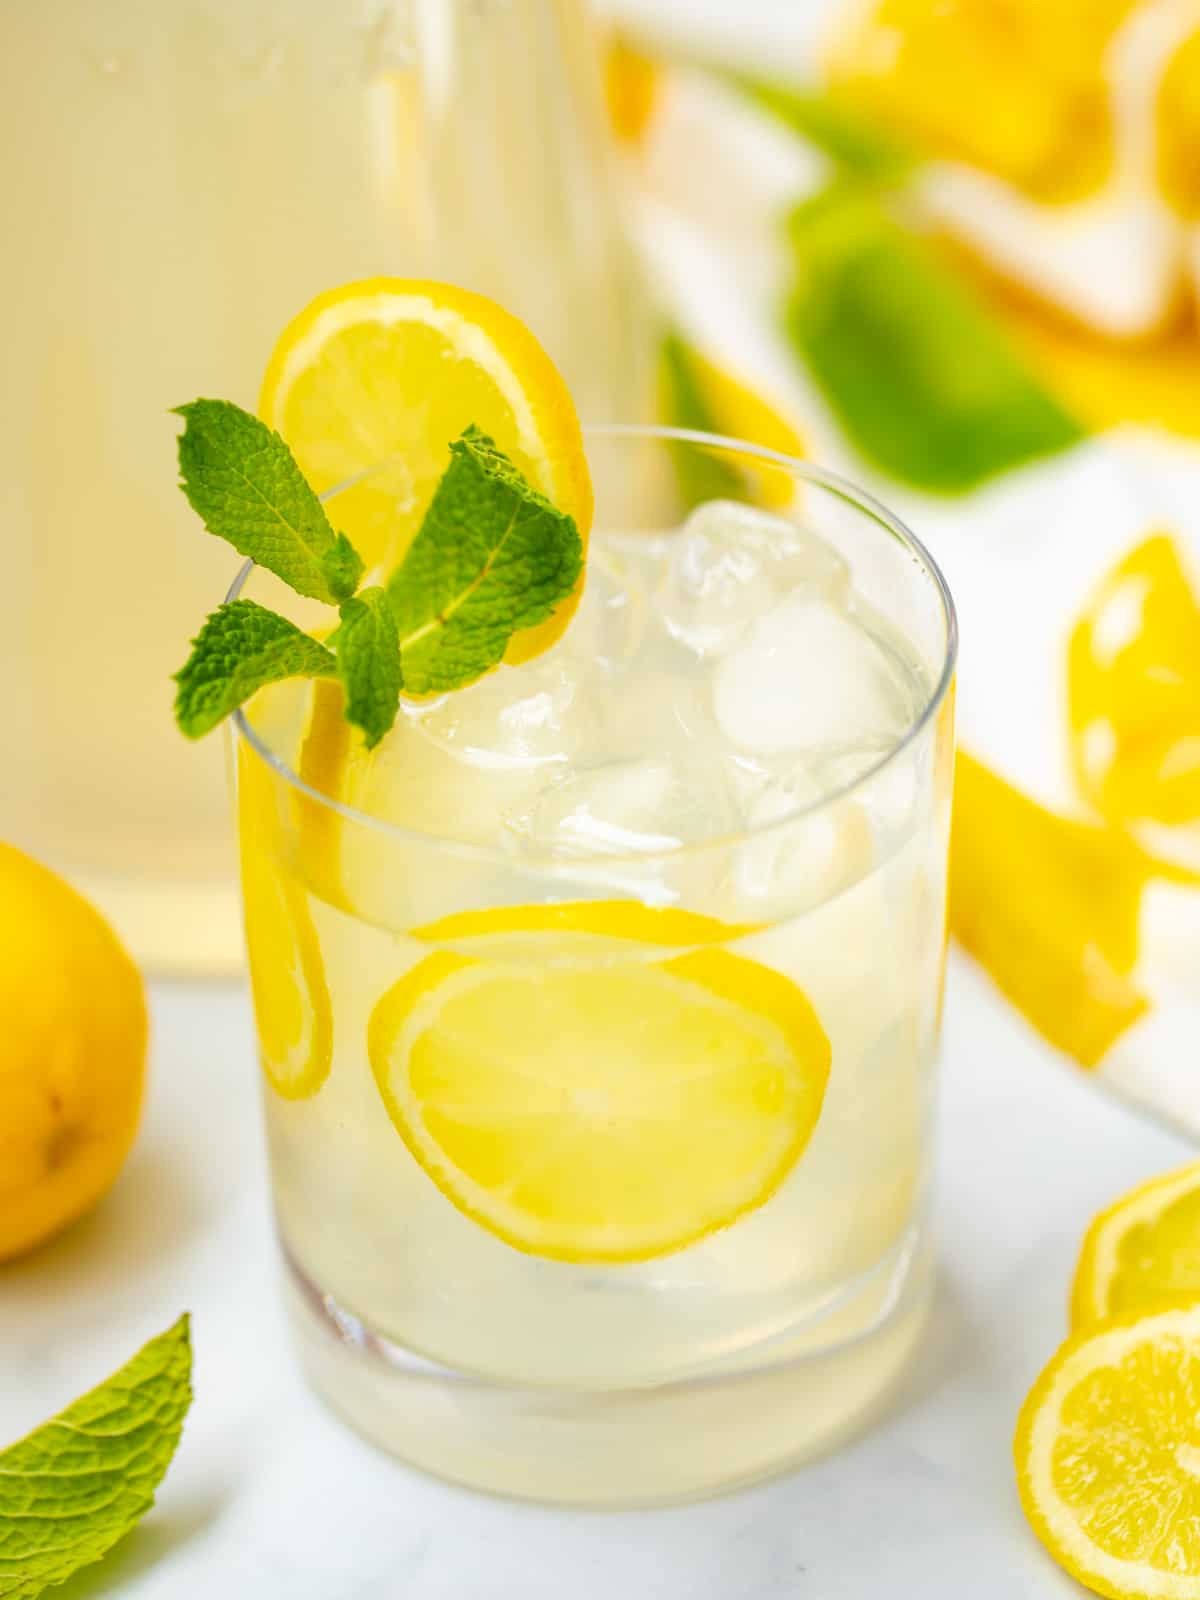 Class of mint lemonad with sliced lemon and fresh mint next to fresh lemons.